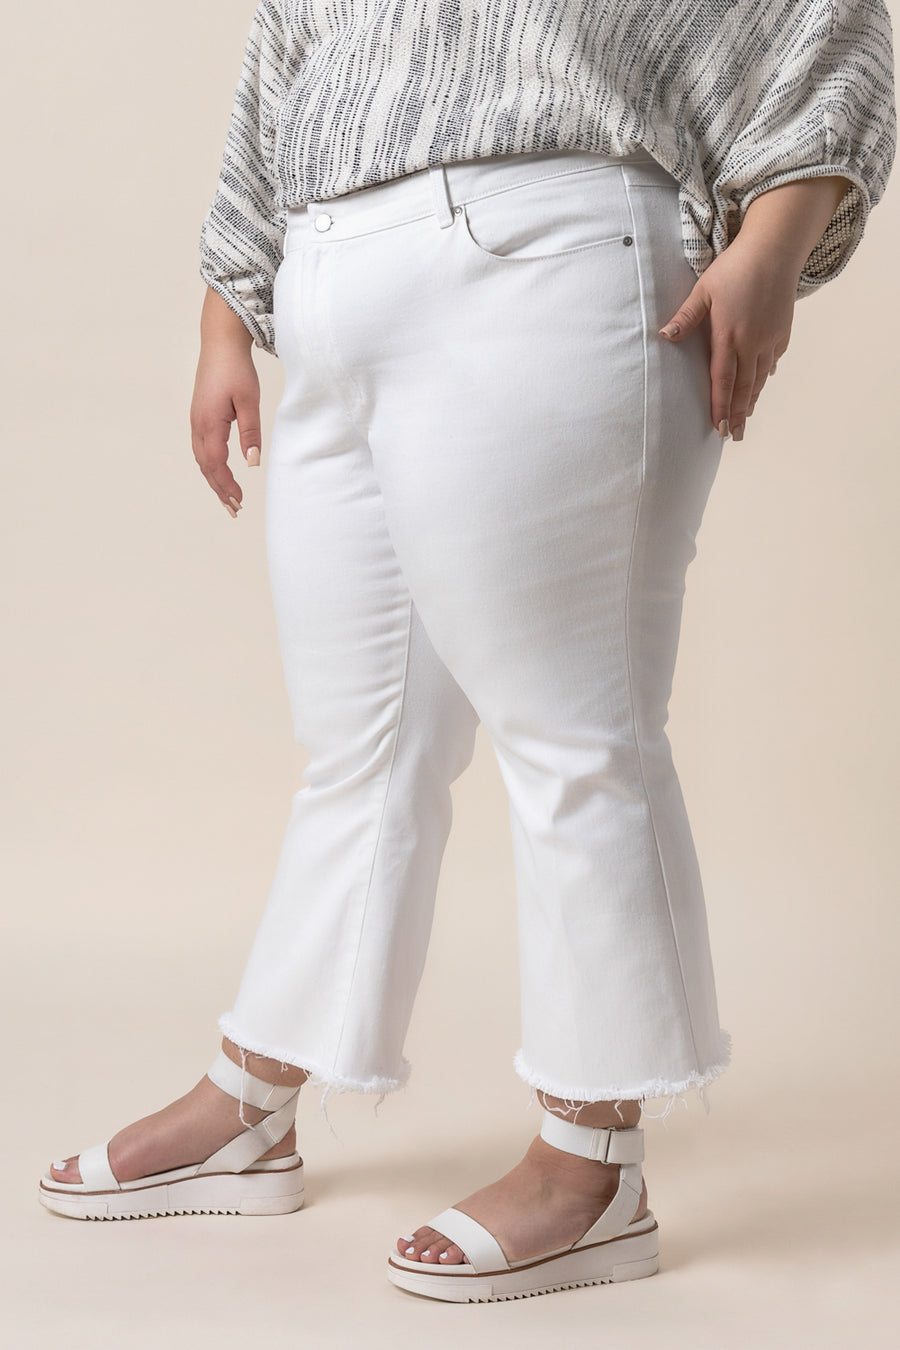 Jude Jeans | Plus Size Bootcut Jeans Pattern | Closet Core Patterns